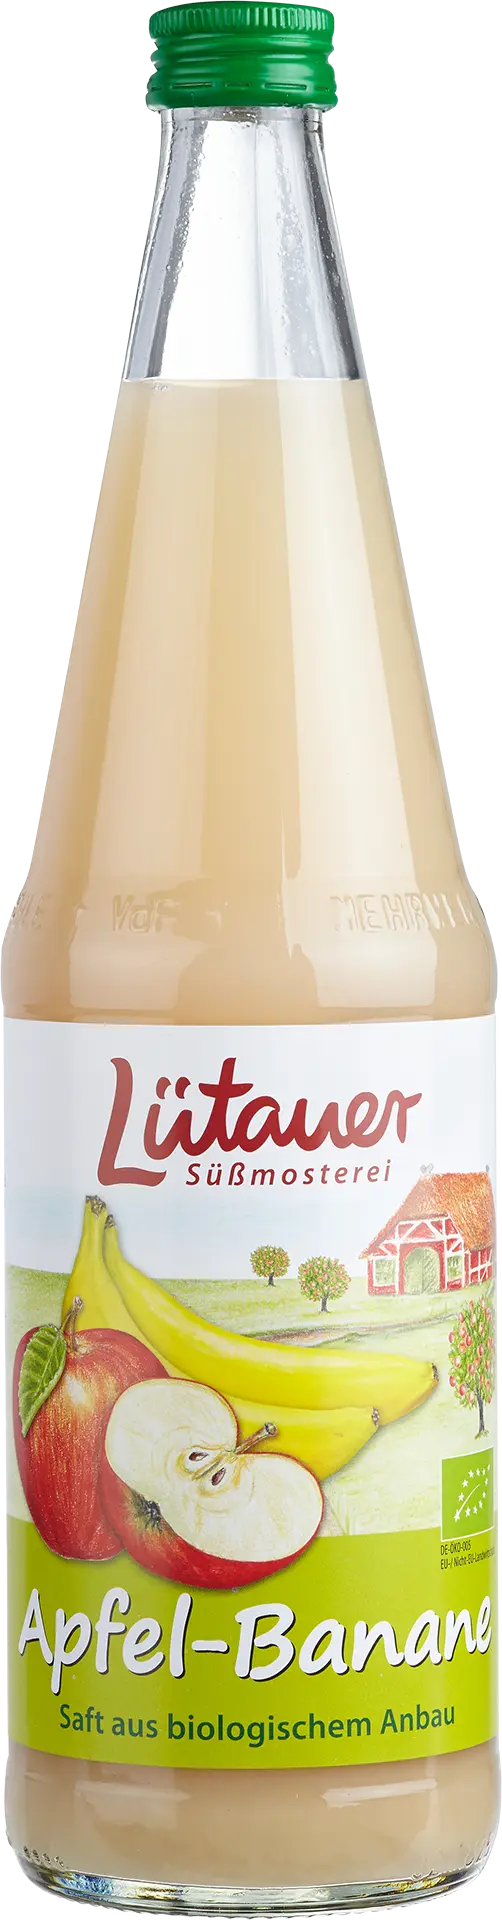 Lütauer Bio-Apfel-Bananensaft